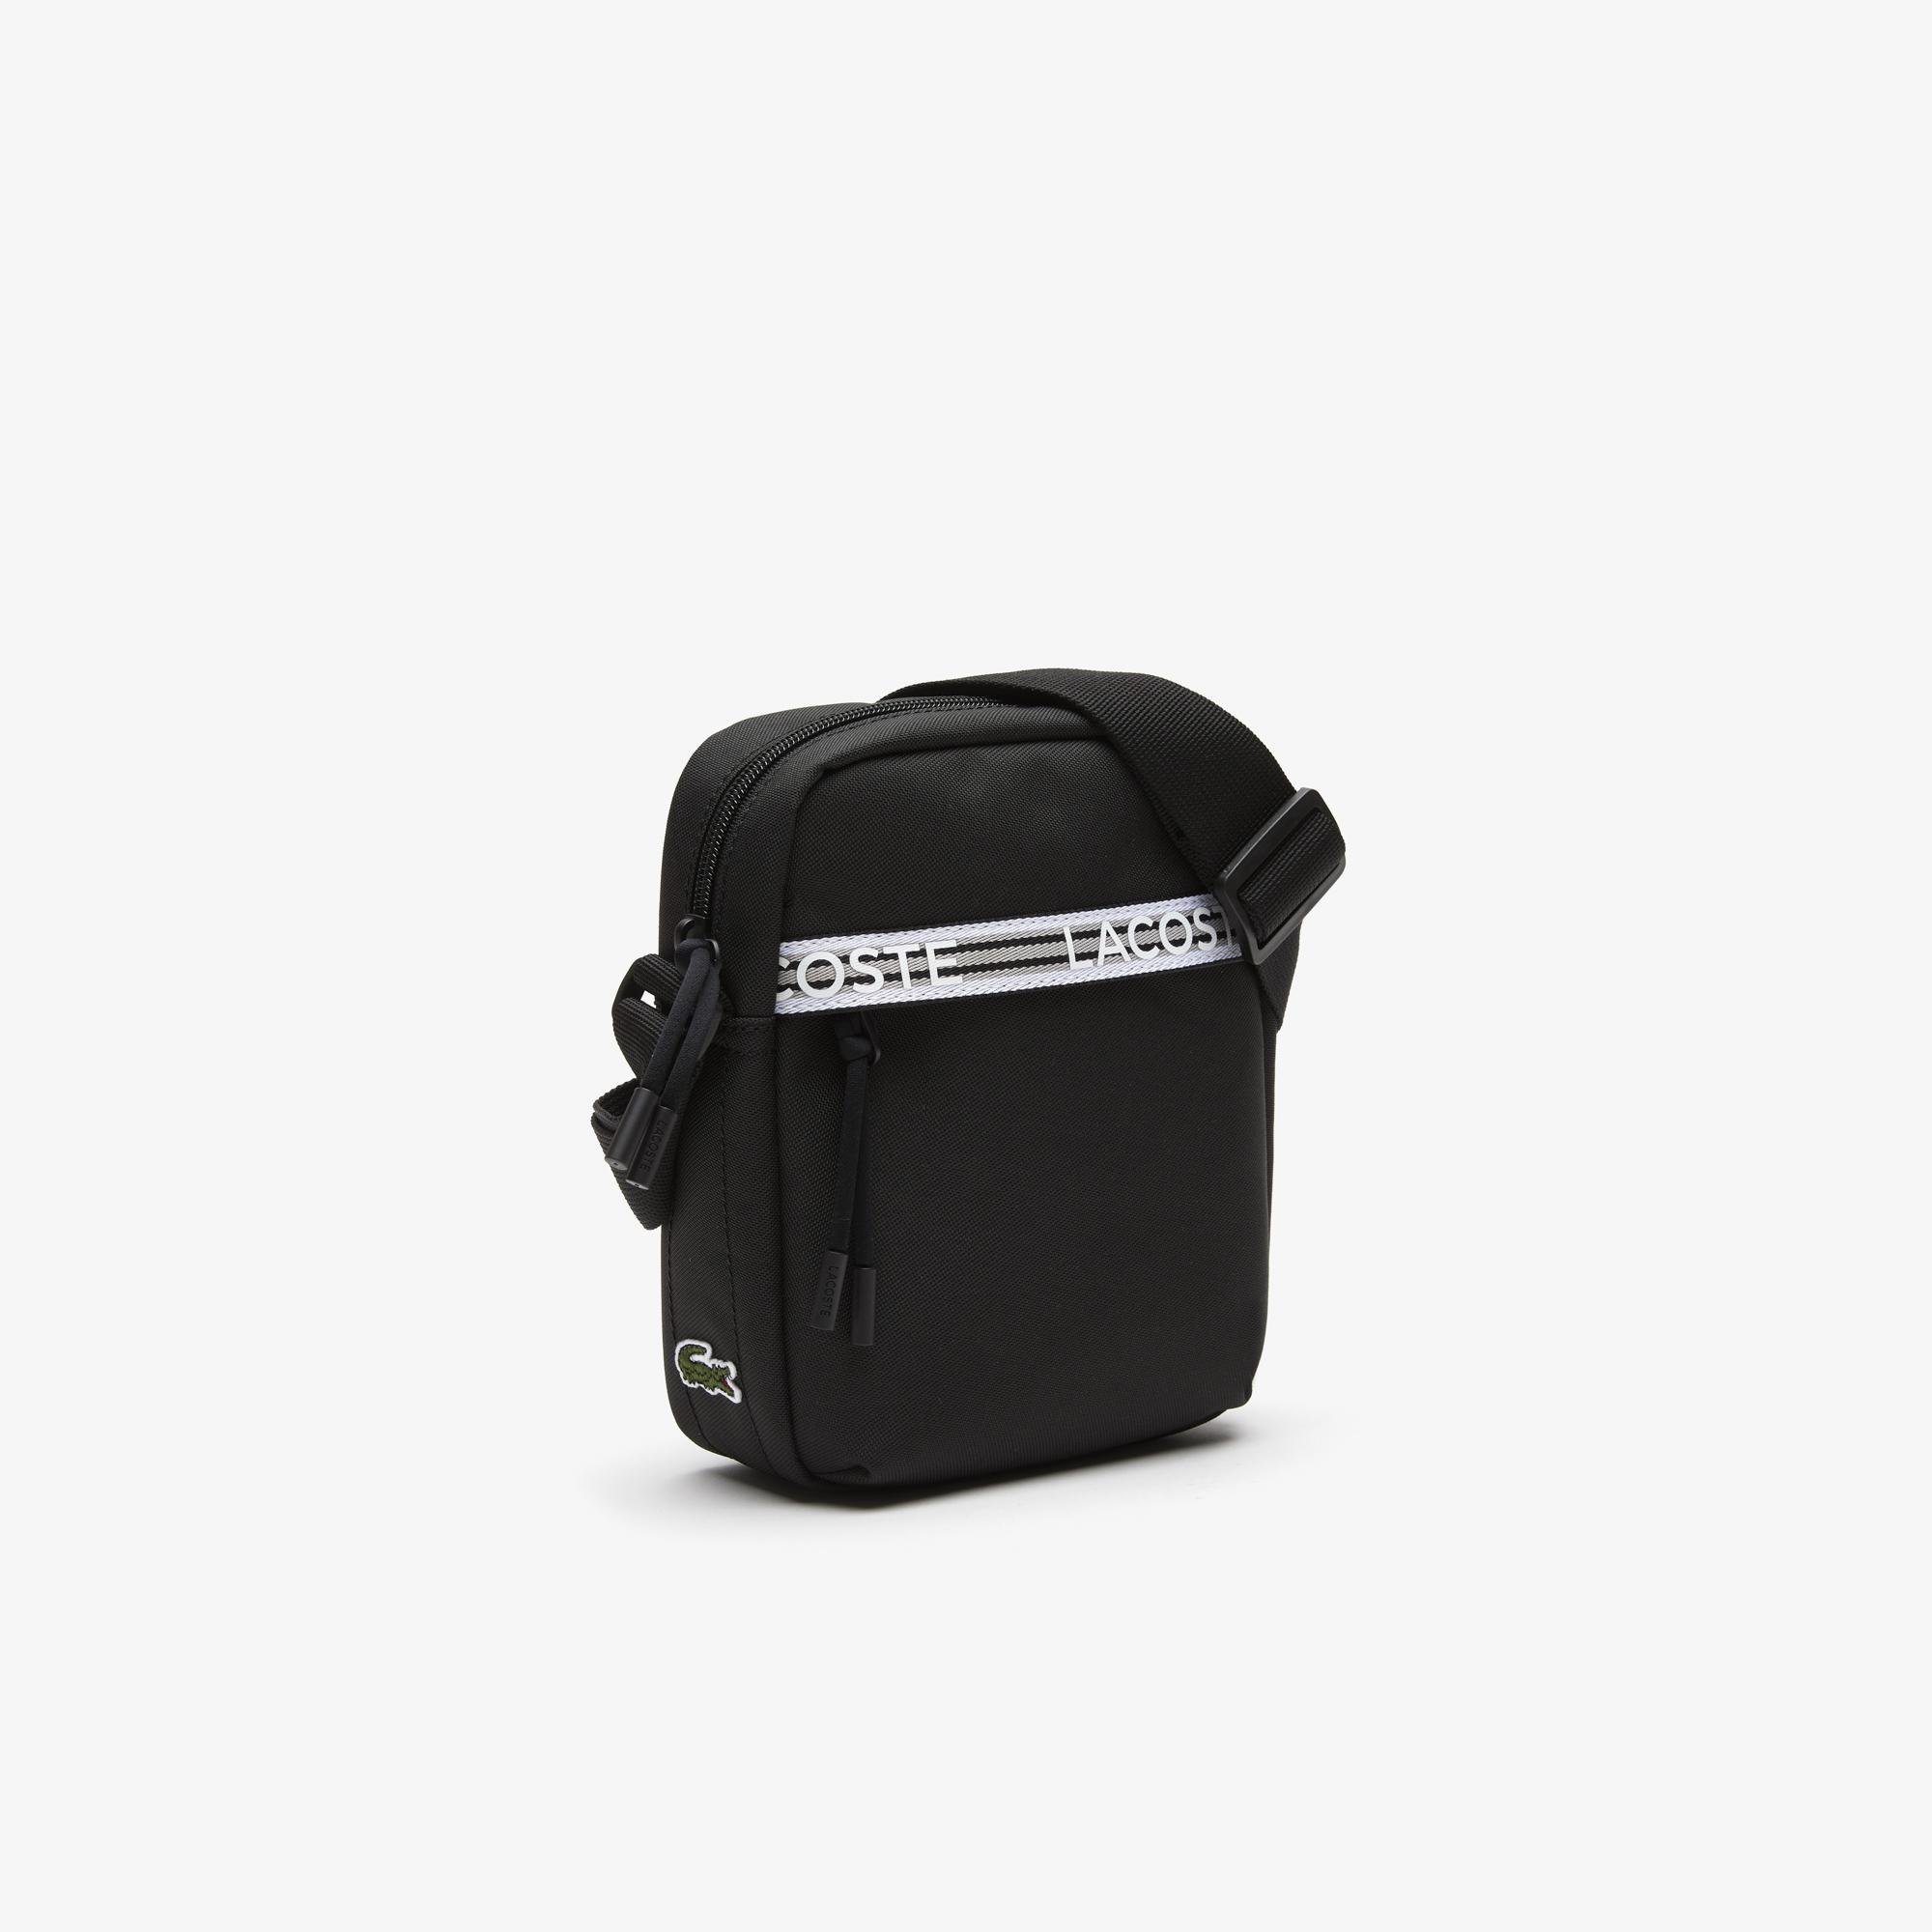 Lacoste Men’s  Neocroc Recycled Fiber Vertical Messenger Bag